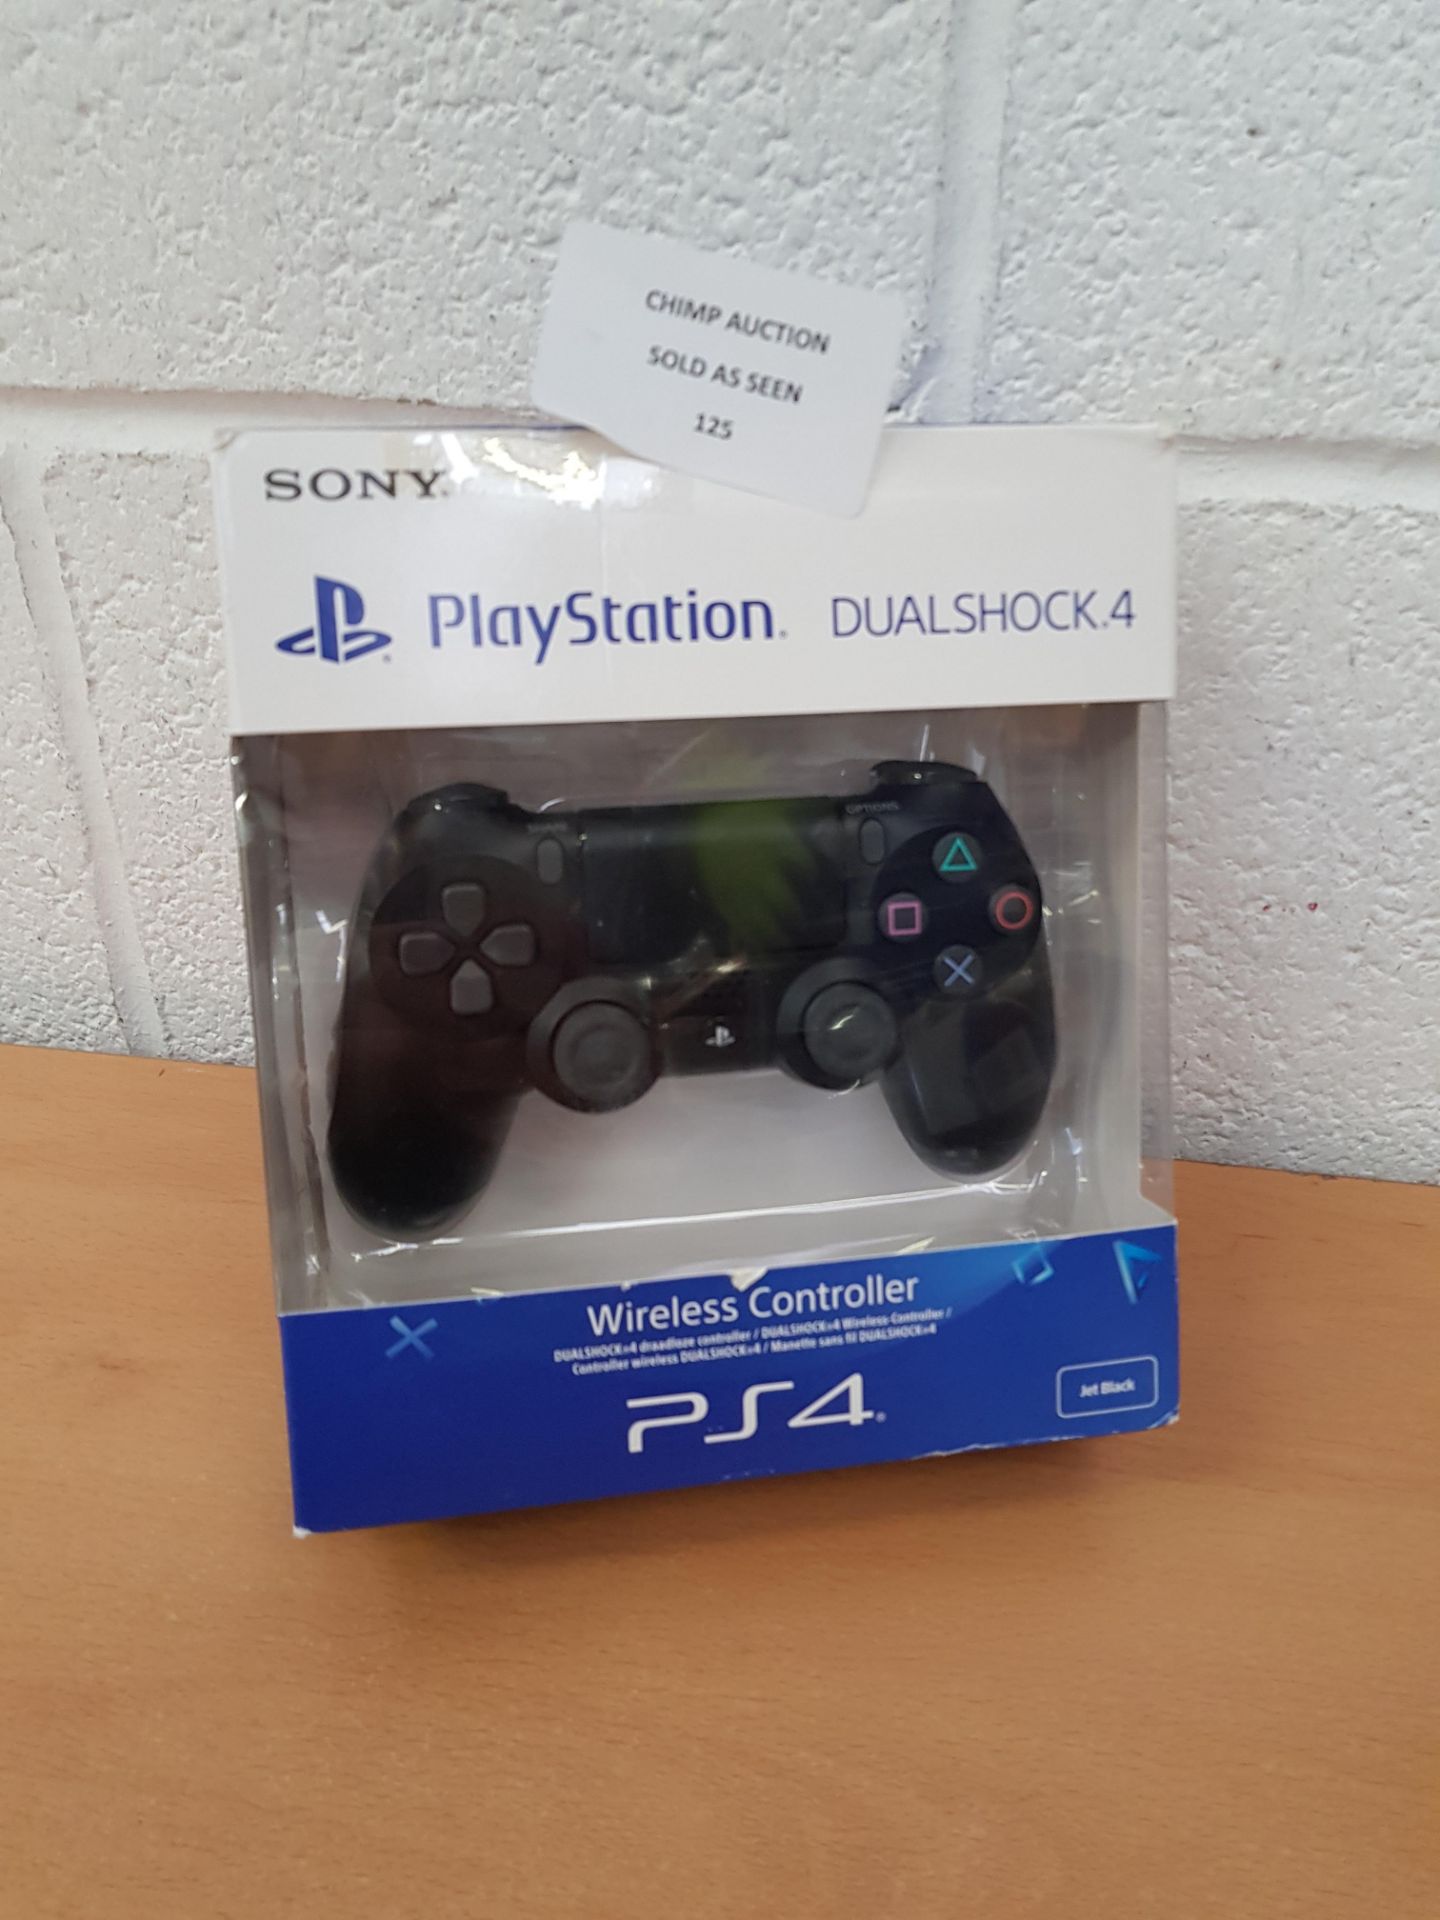 Sony PlayStation 4 Dualshock 4 wireless controller RRP £59.99.